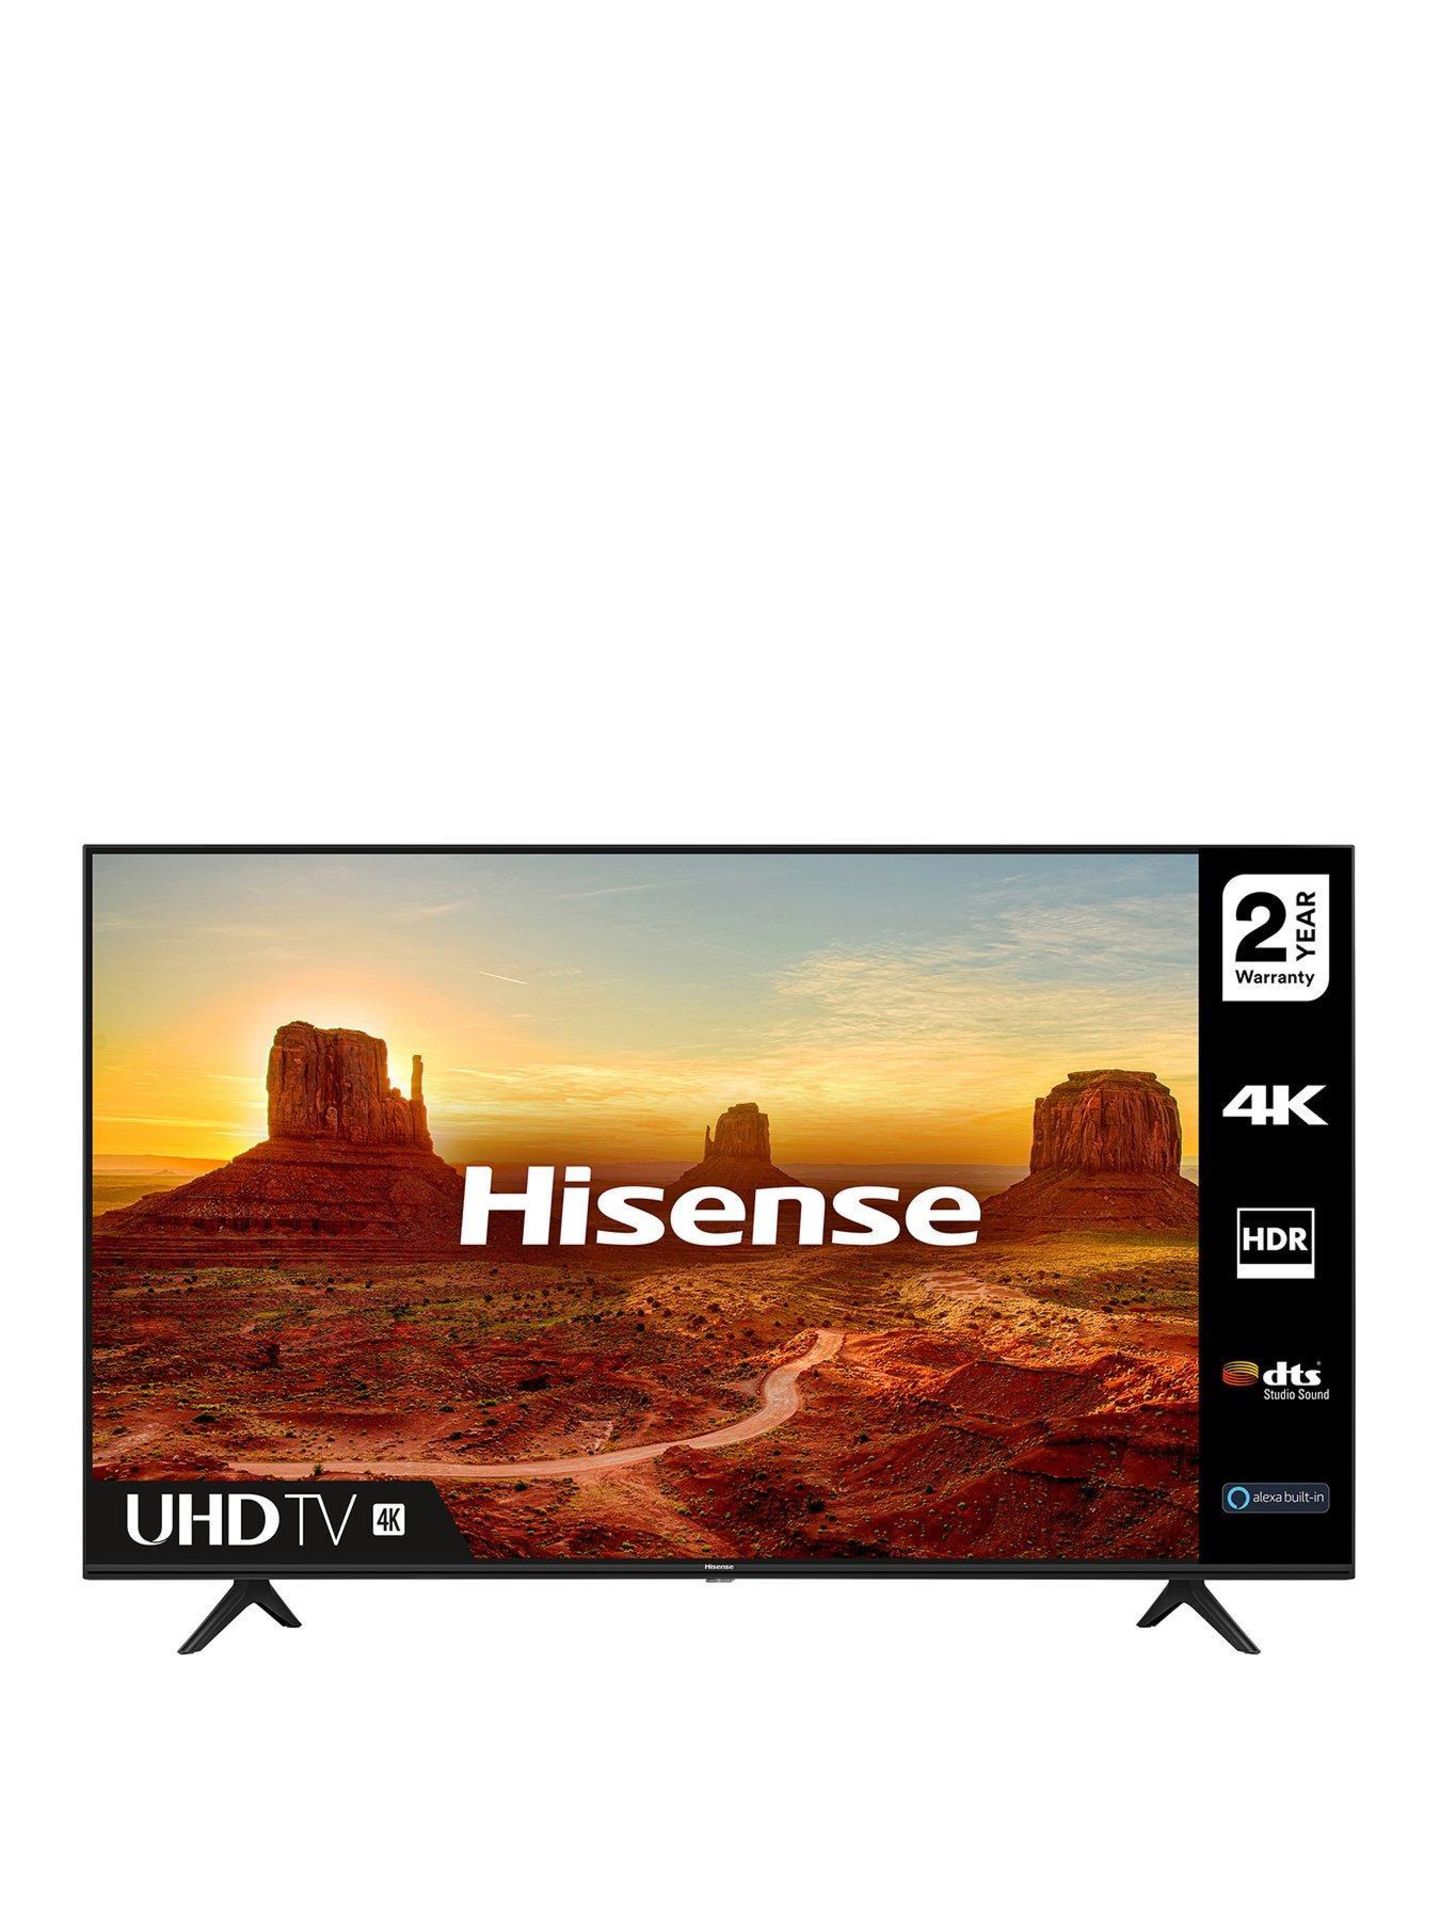 Hisense h50a7100ftuk 50 inch 4k ultra hd, hdr, freeview play smart tv [black] 71x112x23cm rrp: